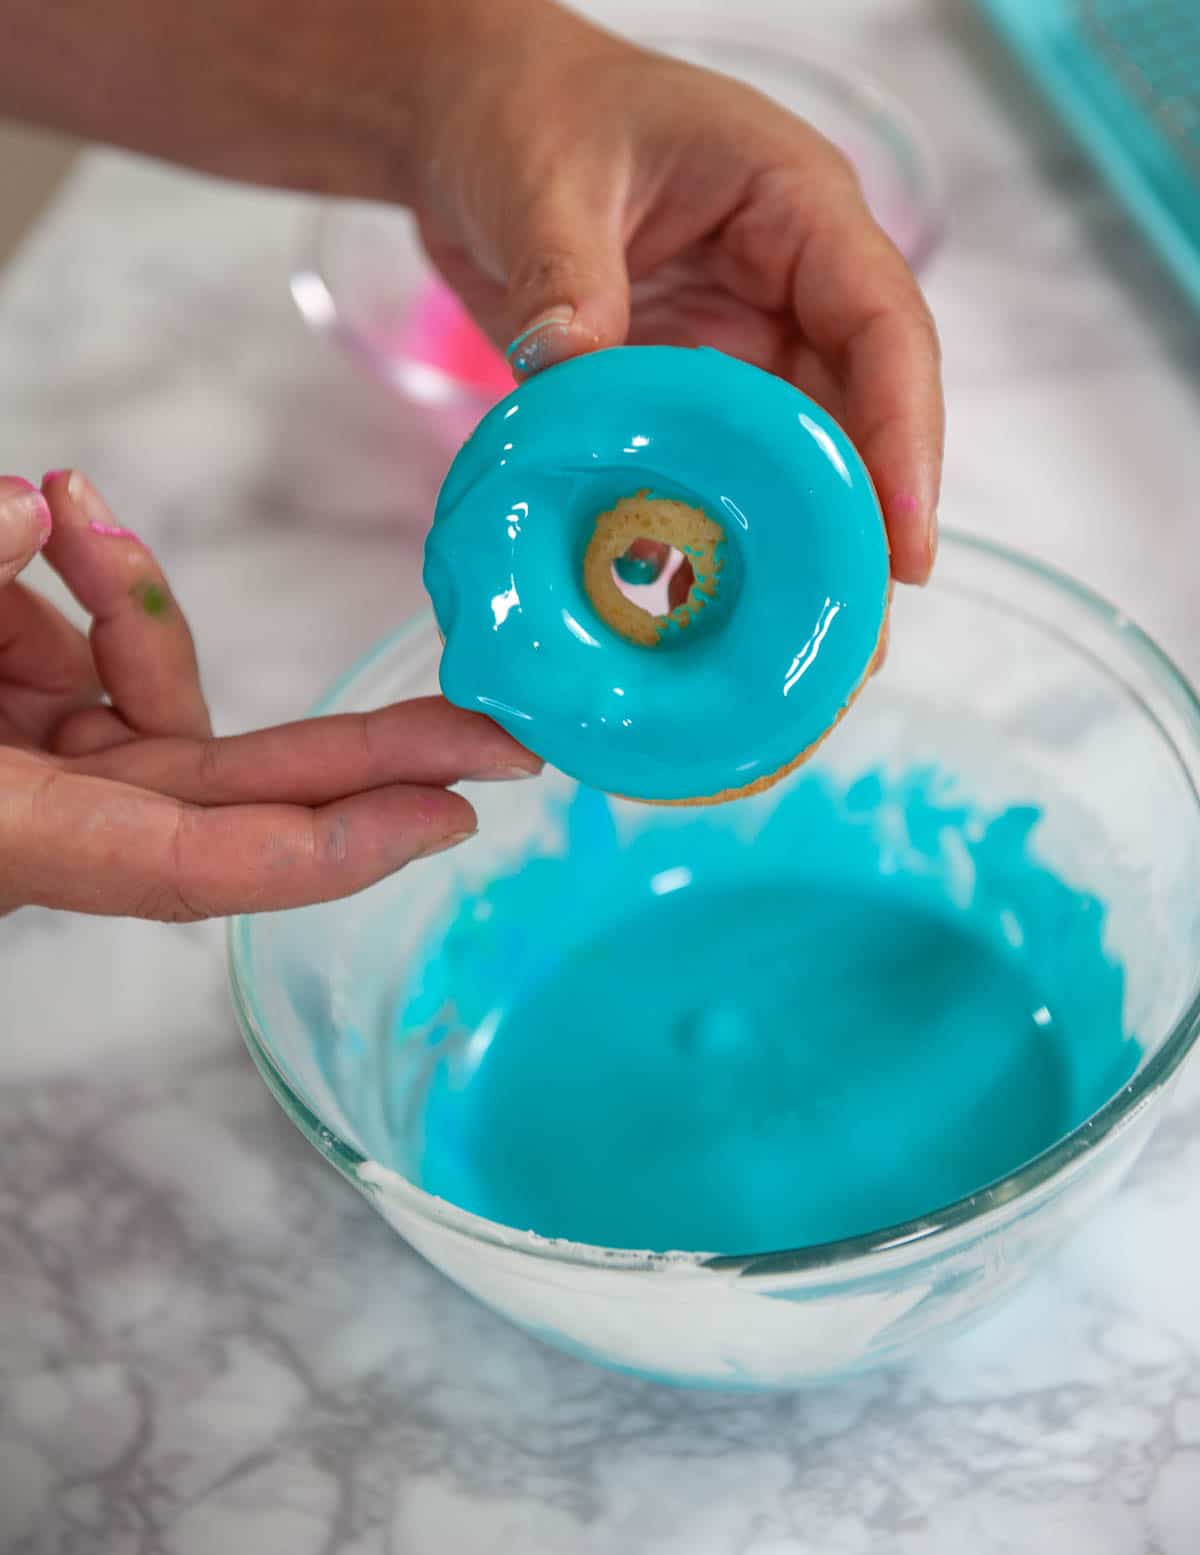 dunking a baked donut in blue donut glaze